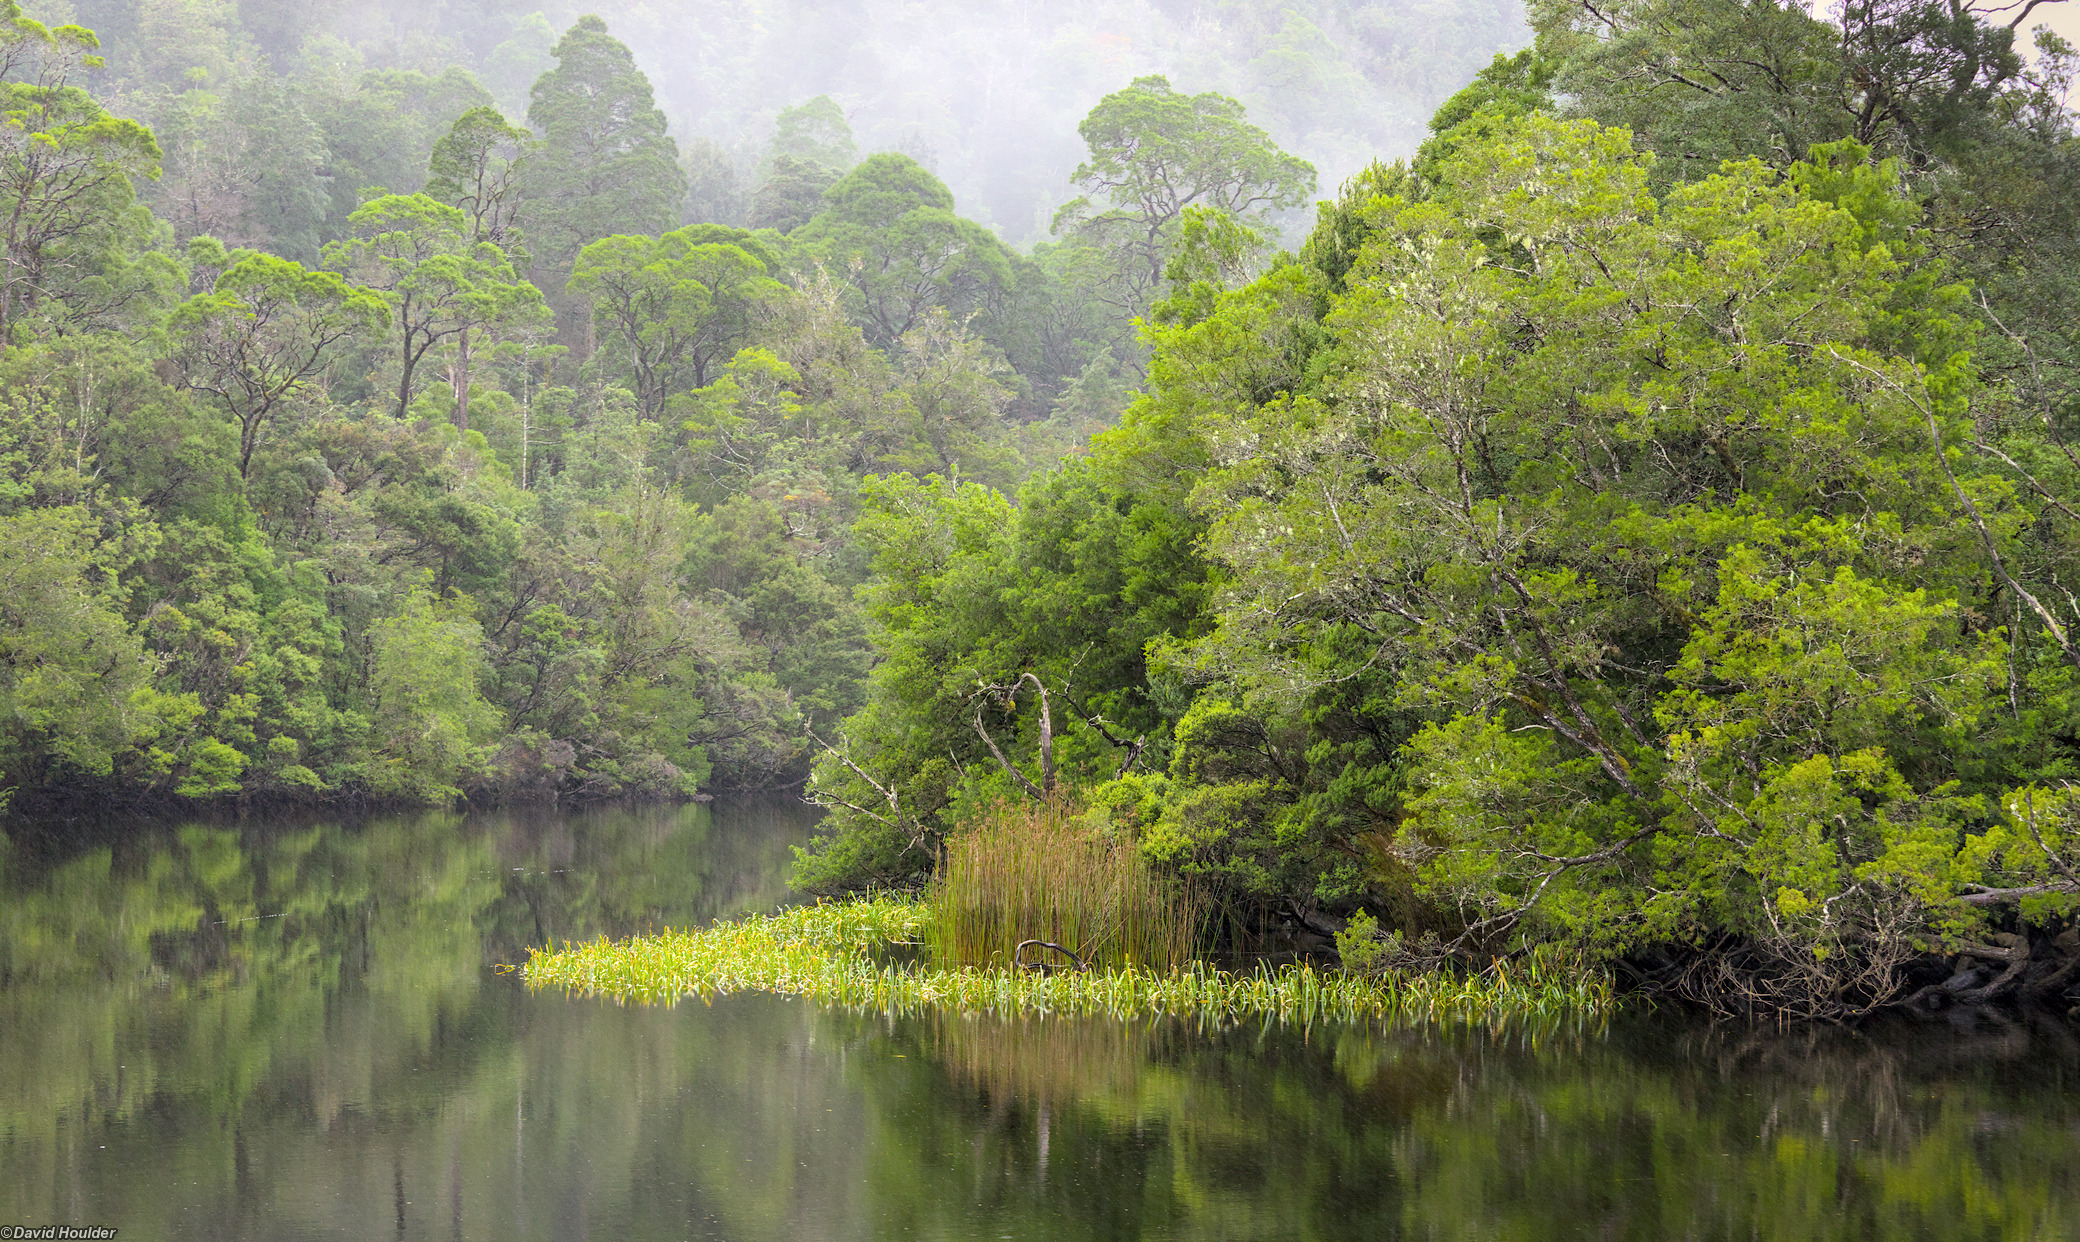 Rainforest on river bank